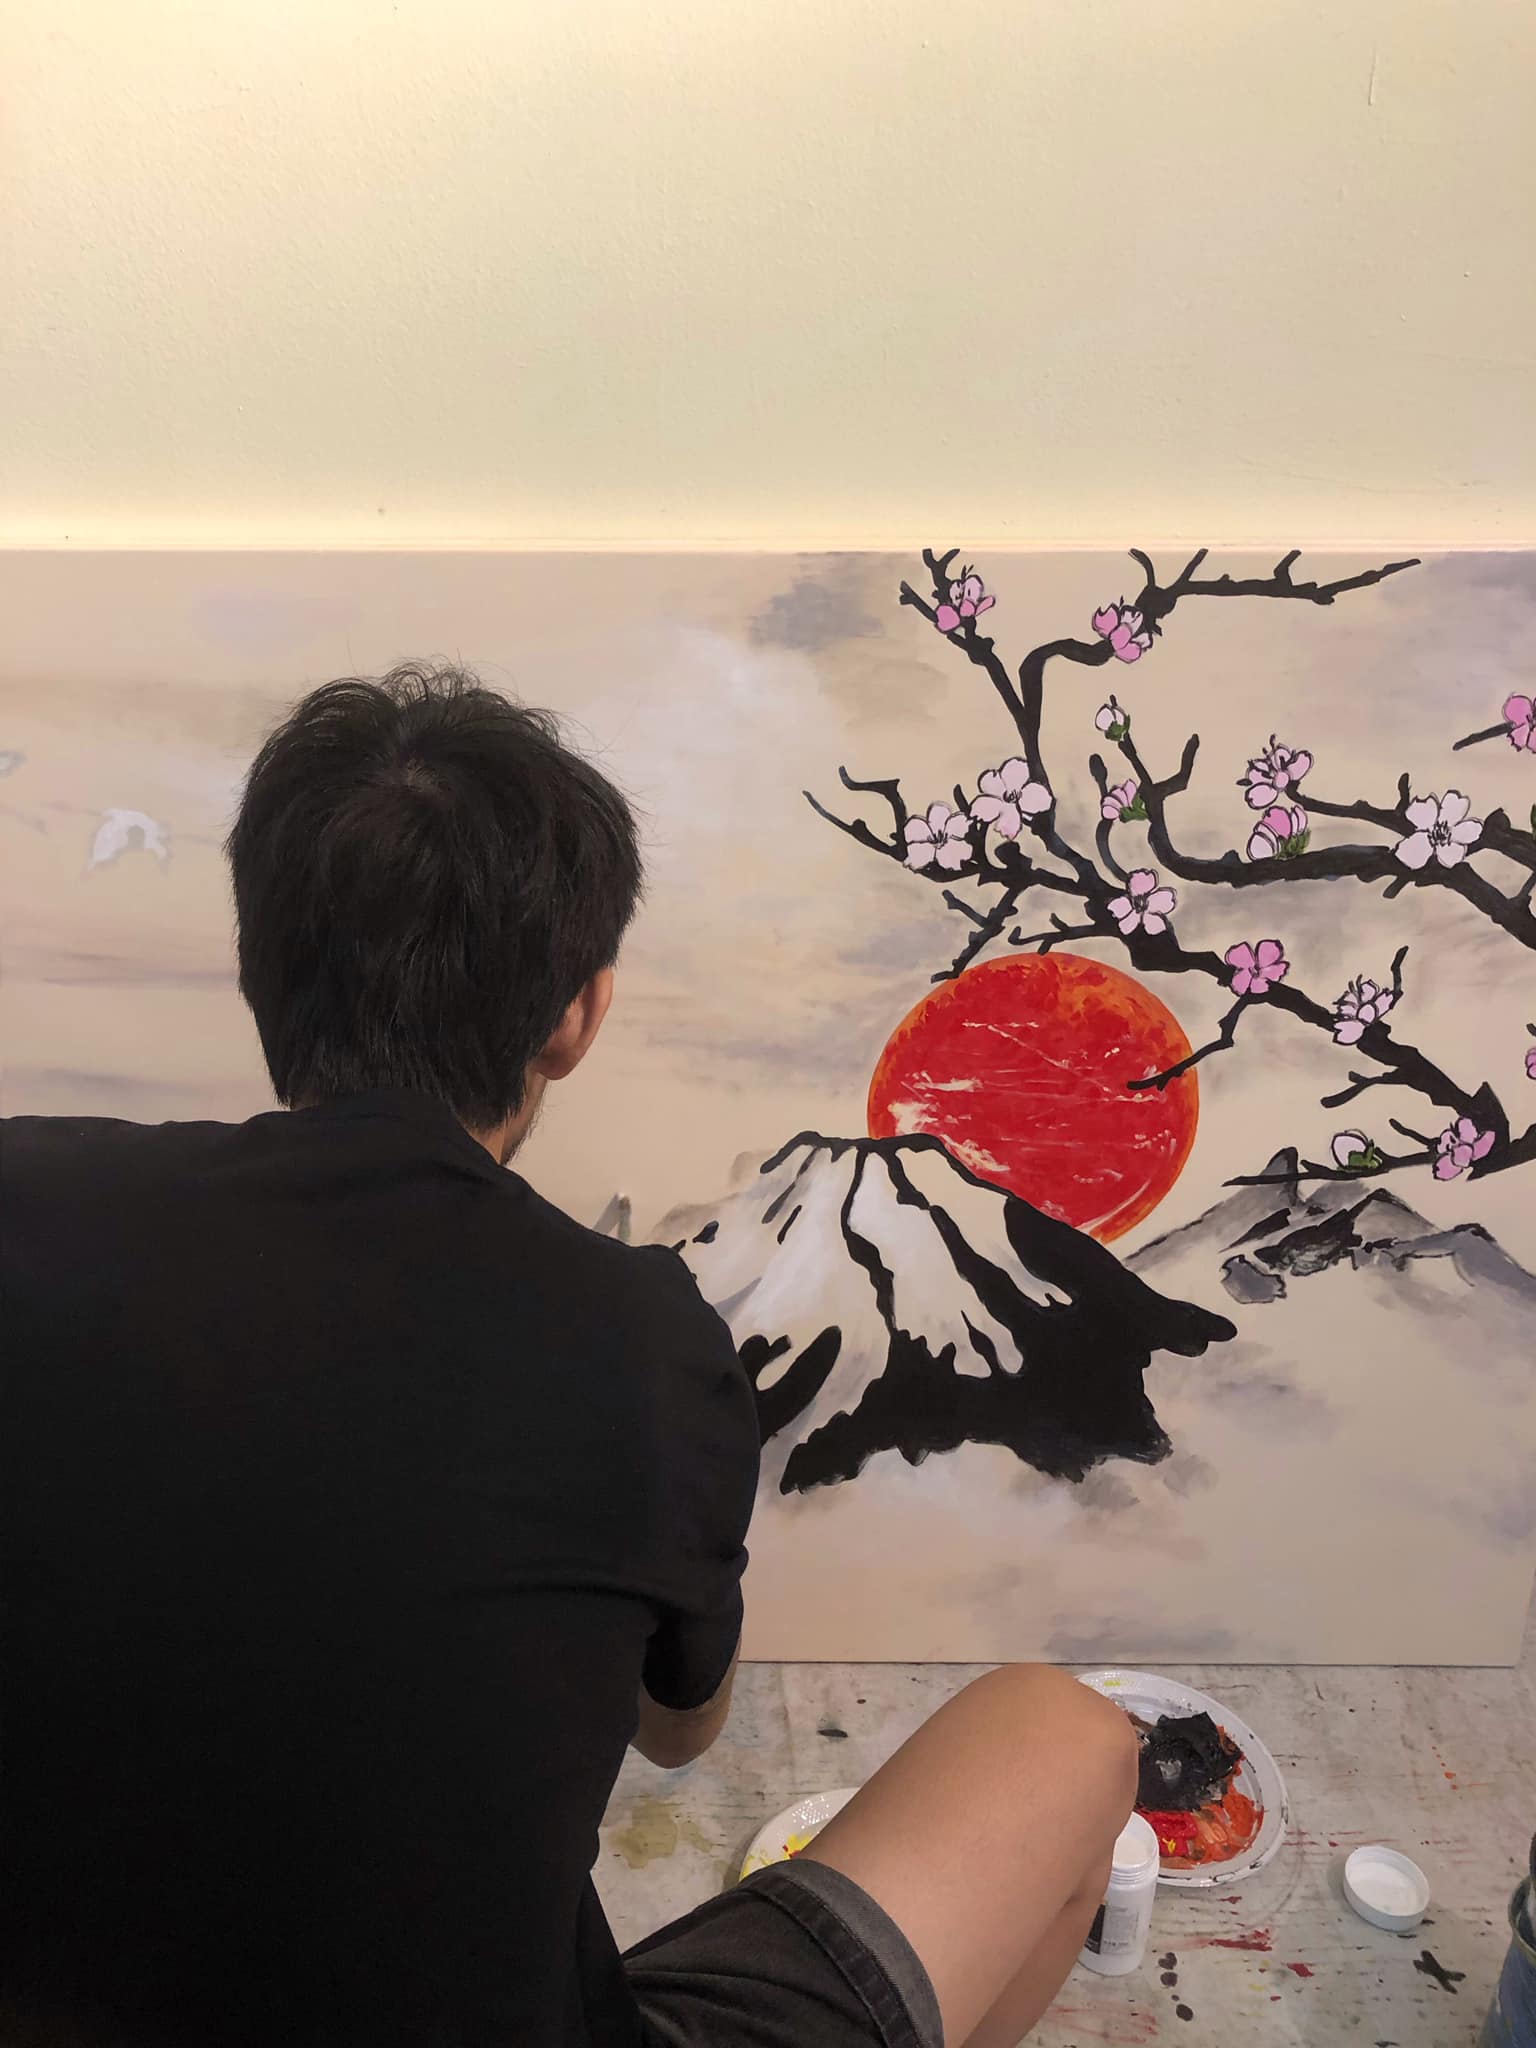 Copying oil paintings according to customers' orders in Co Nhue, Hanoi